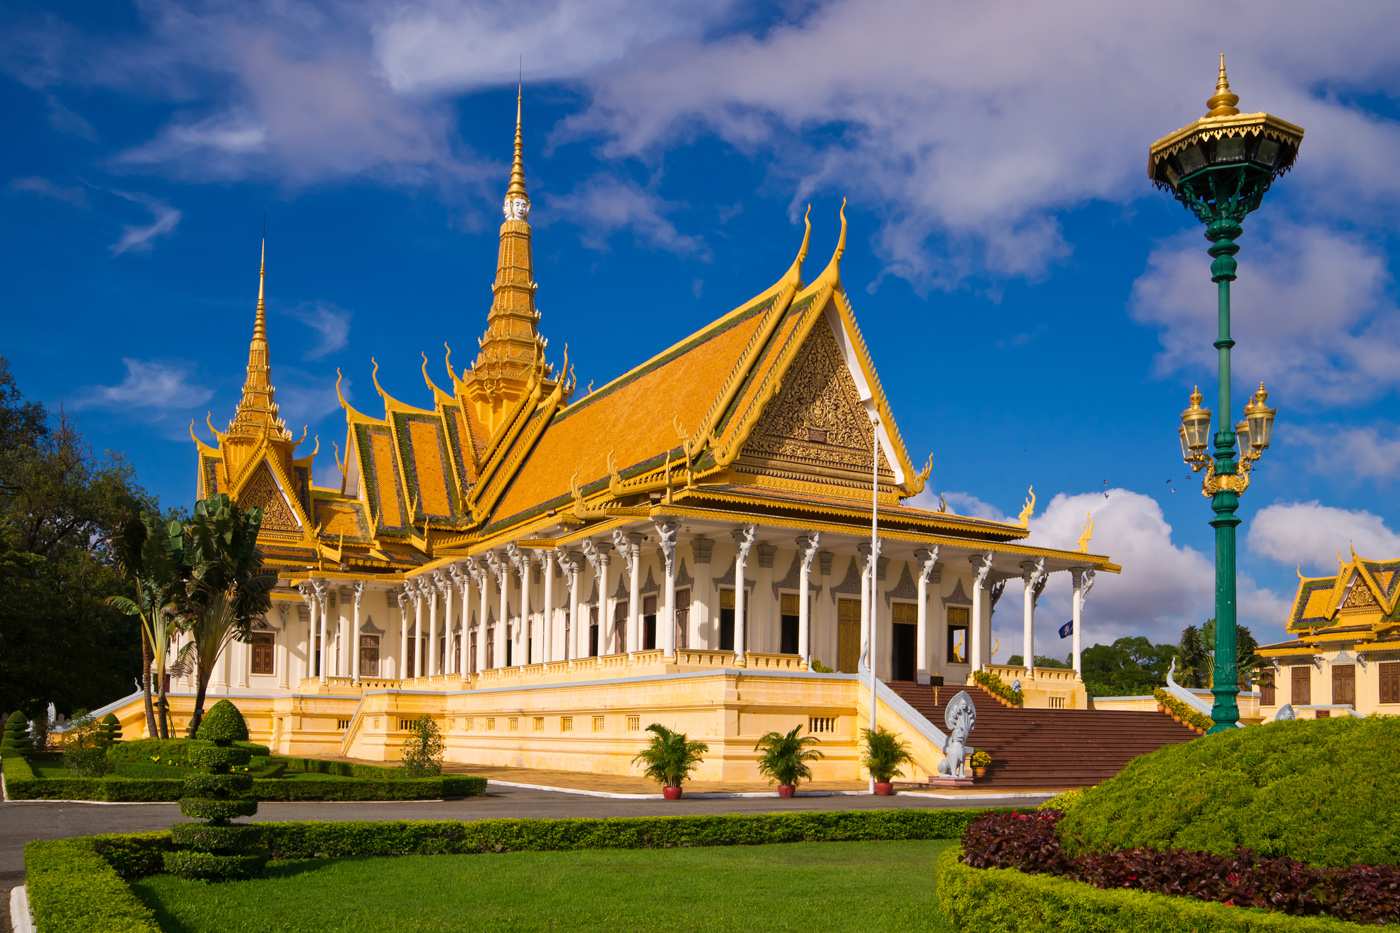 Cambodia Phnom Penh Royal Palace - Cambodia Motorcycle Tours from Phnom Penh to Siem Reap